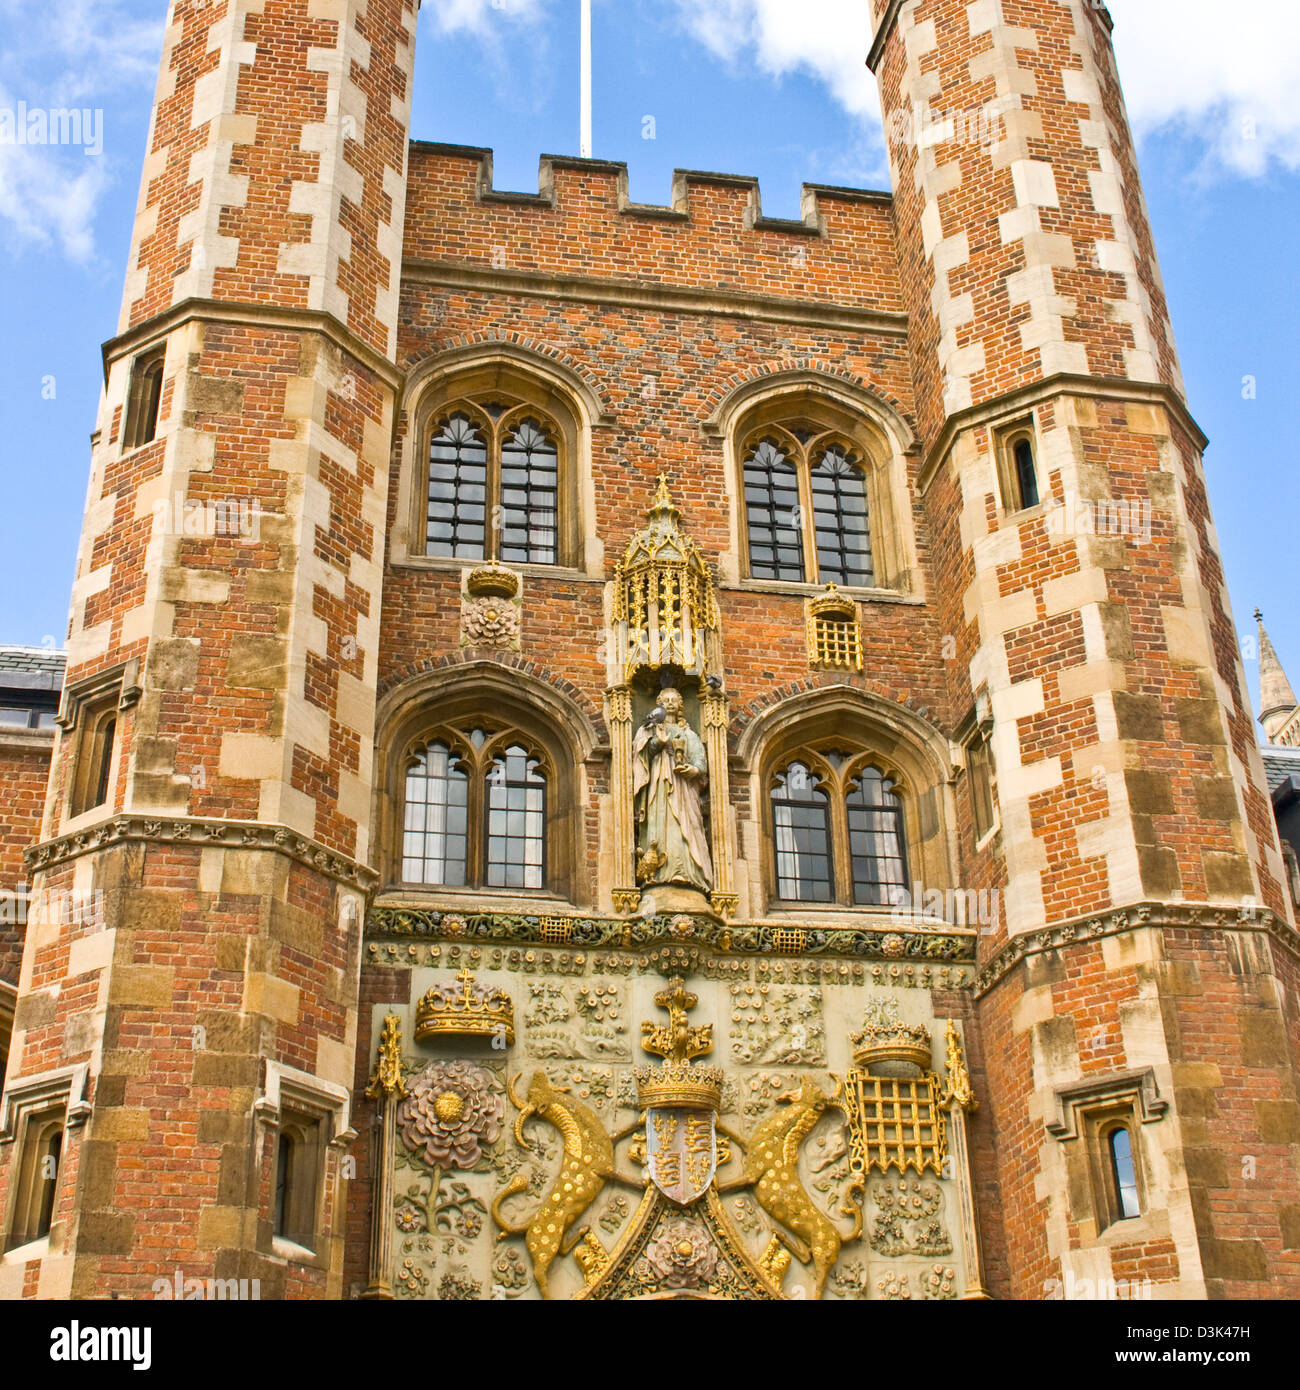 Decorative ornate gatehouse entrance of 16th-century grade 1 listed St John's College Cambridge Cambridgeshire England Europe Stock Photo